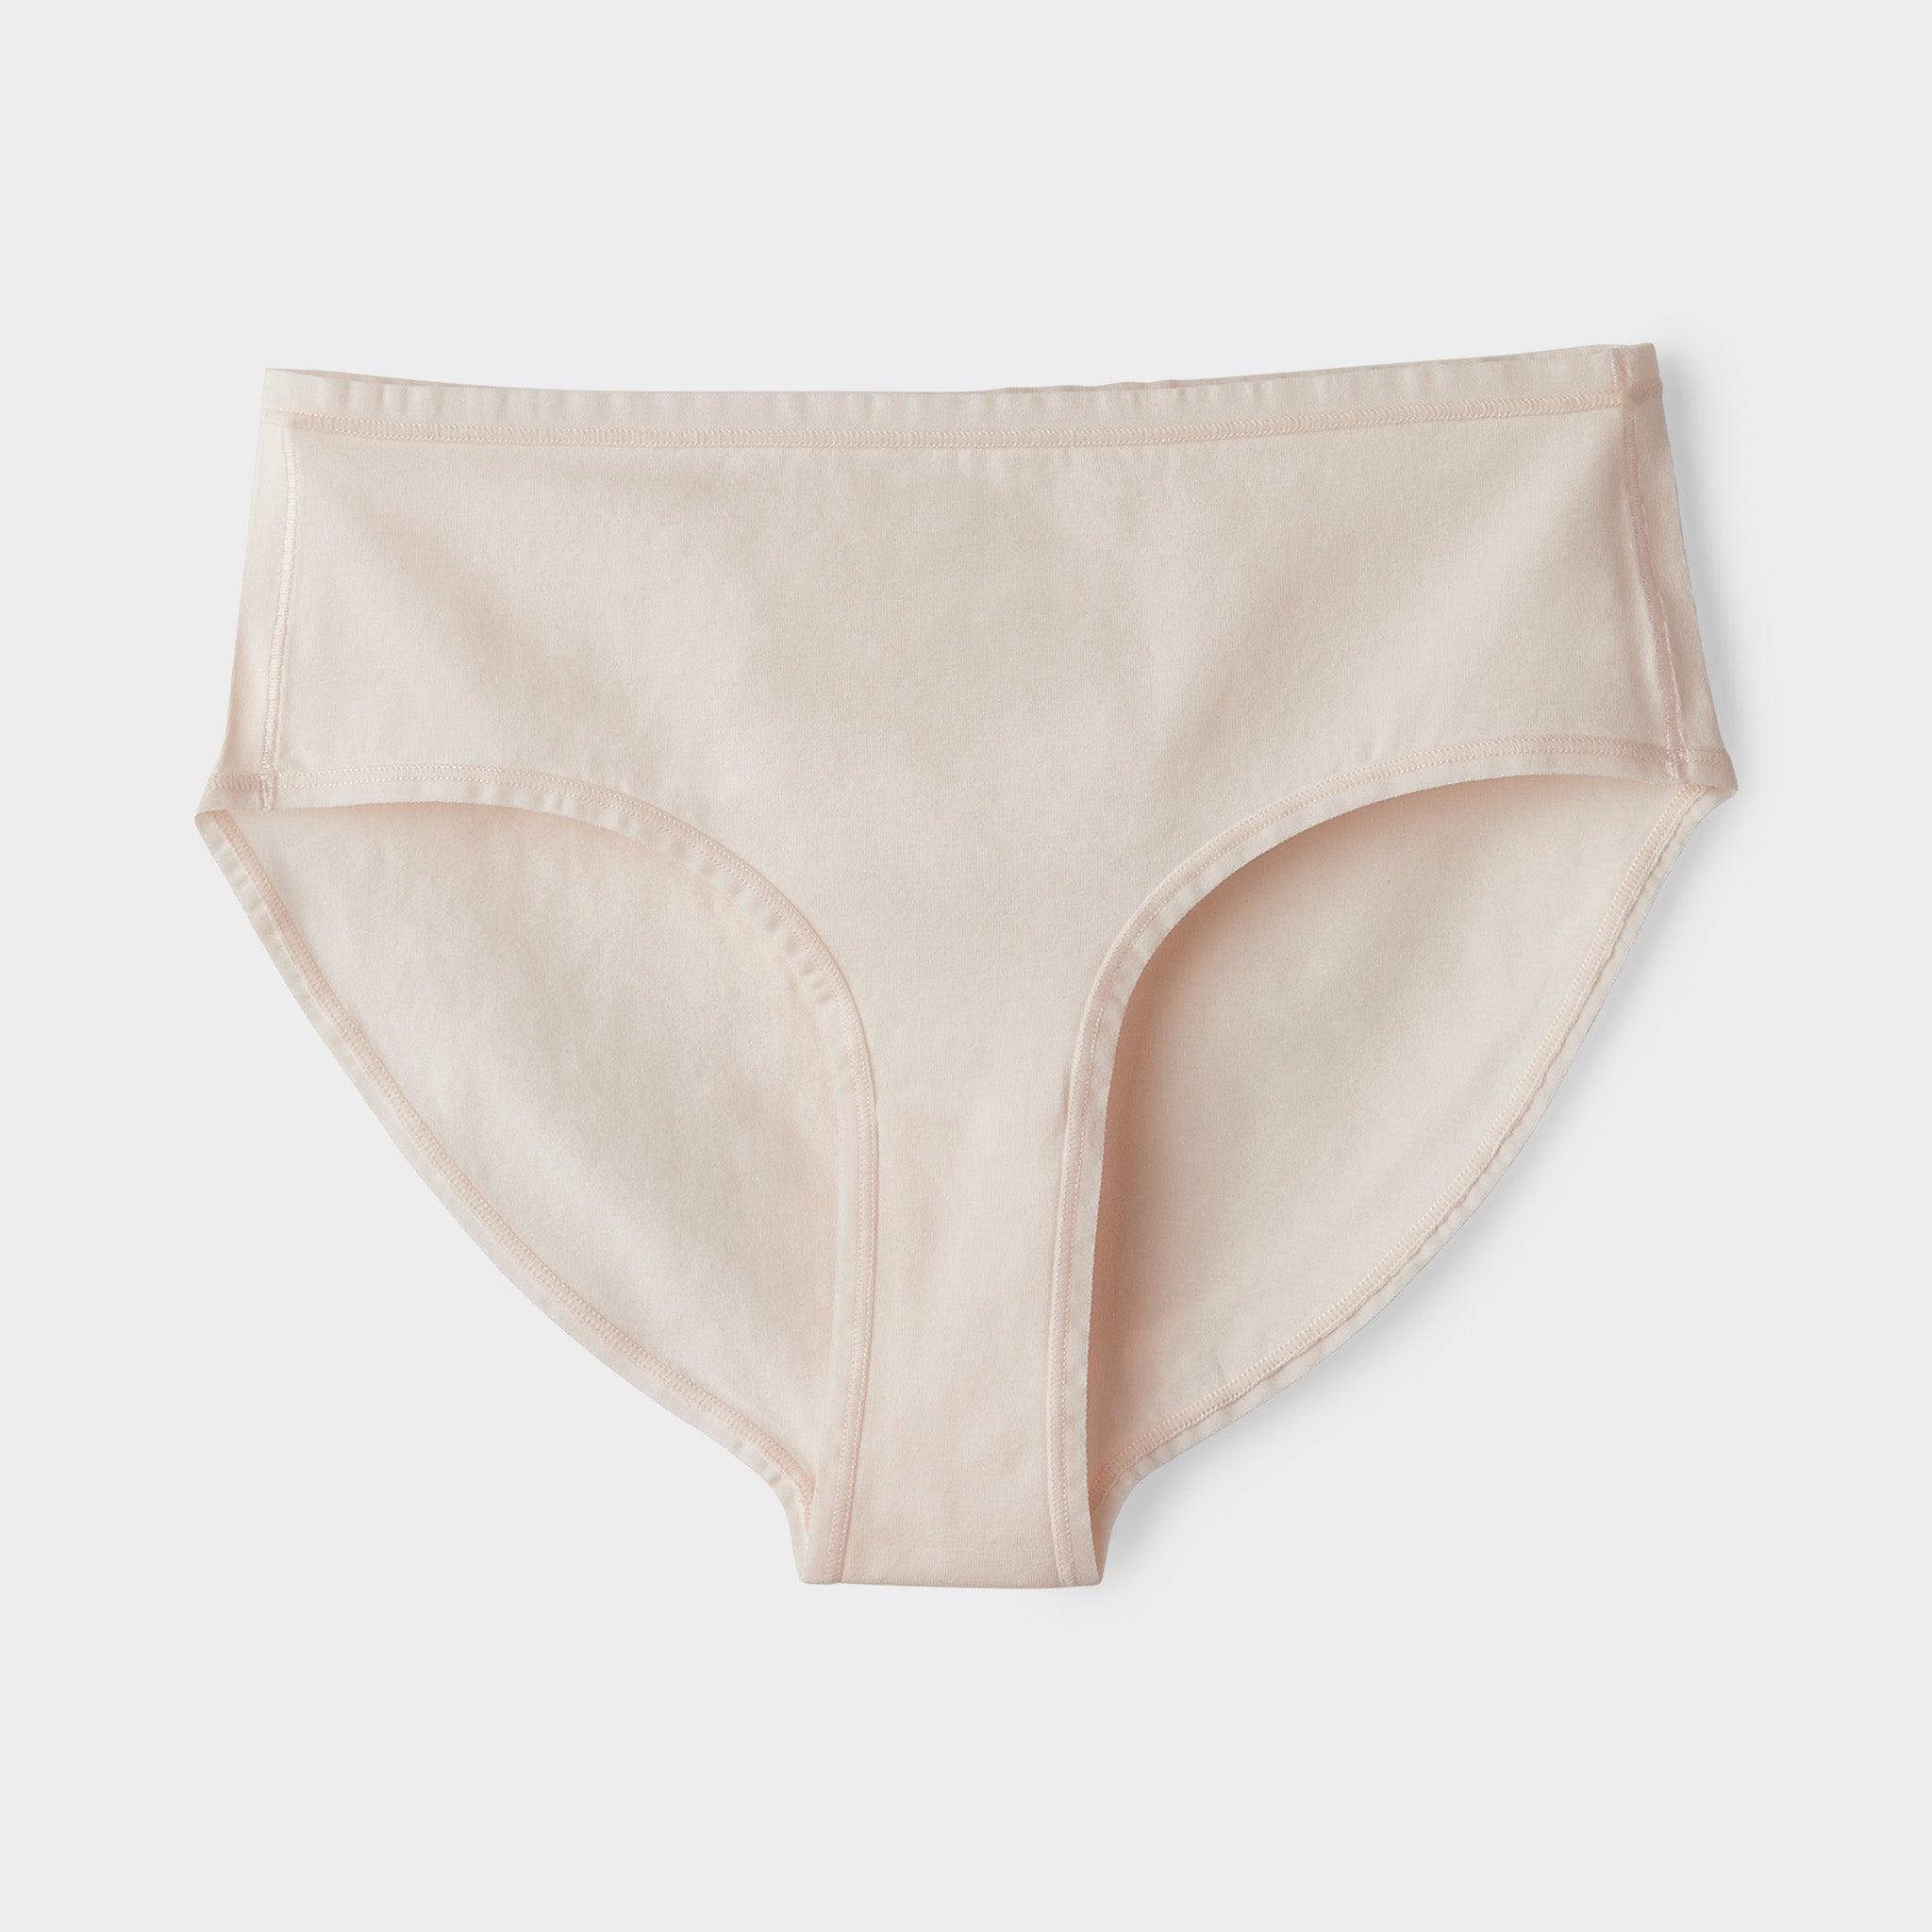 Moody Shroom Women's Organic Cotton Underwear, Thong, Cheekini, High Waist,  Matching Underwear, for Her, Gift Idea Organic Underwear 